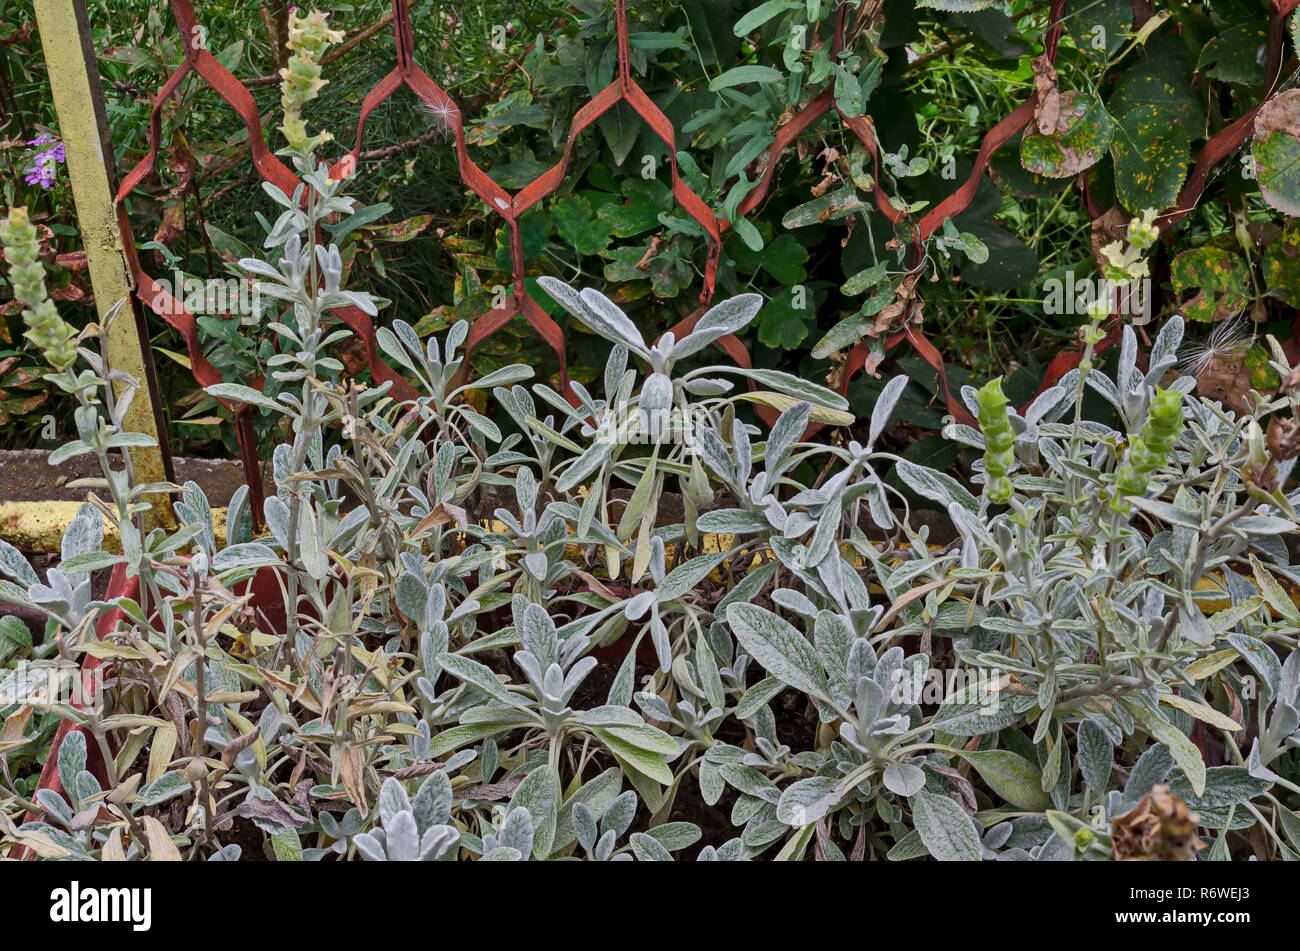 Summer view of herb Sideritis Scardica, mountain tea, growing in garden at mountain town Delchevo, Macedonia, Europe Stock Photo